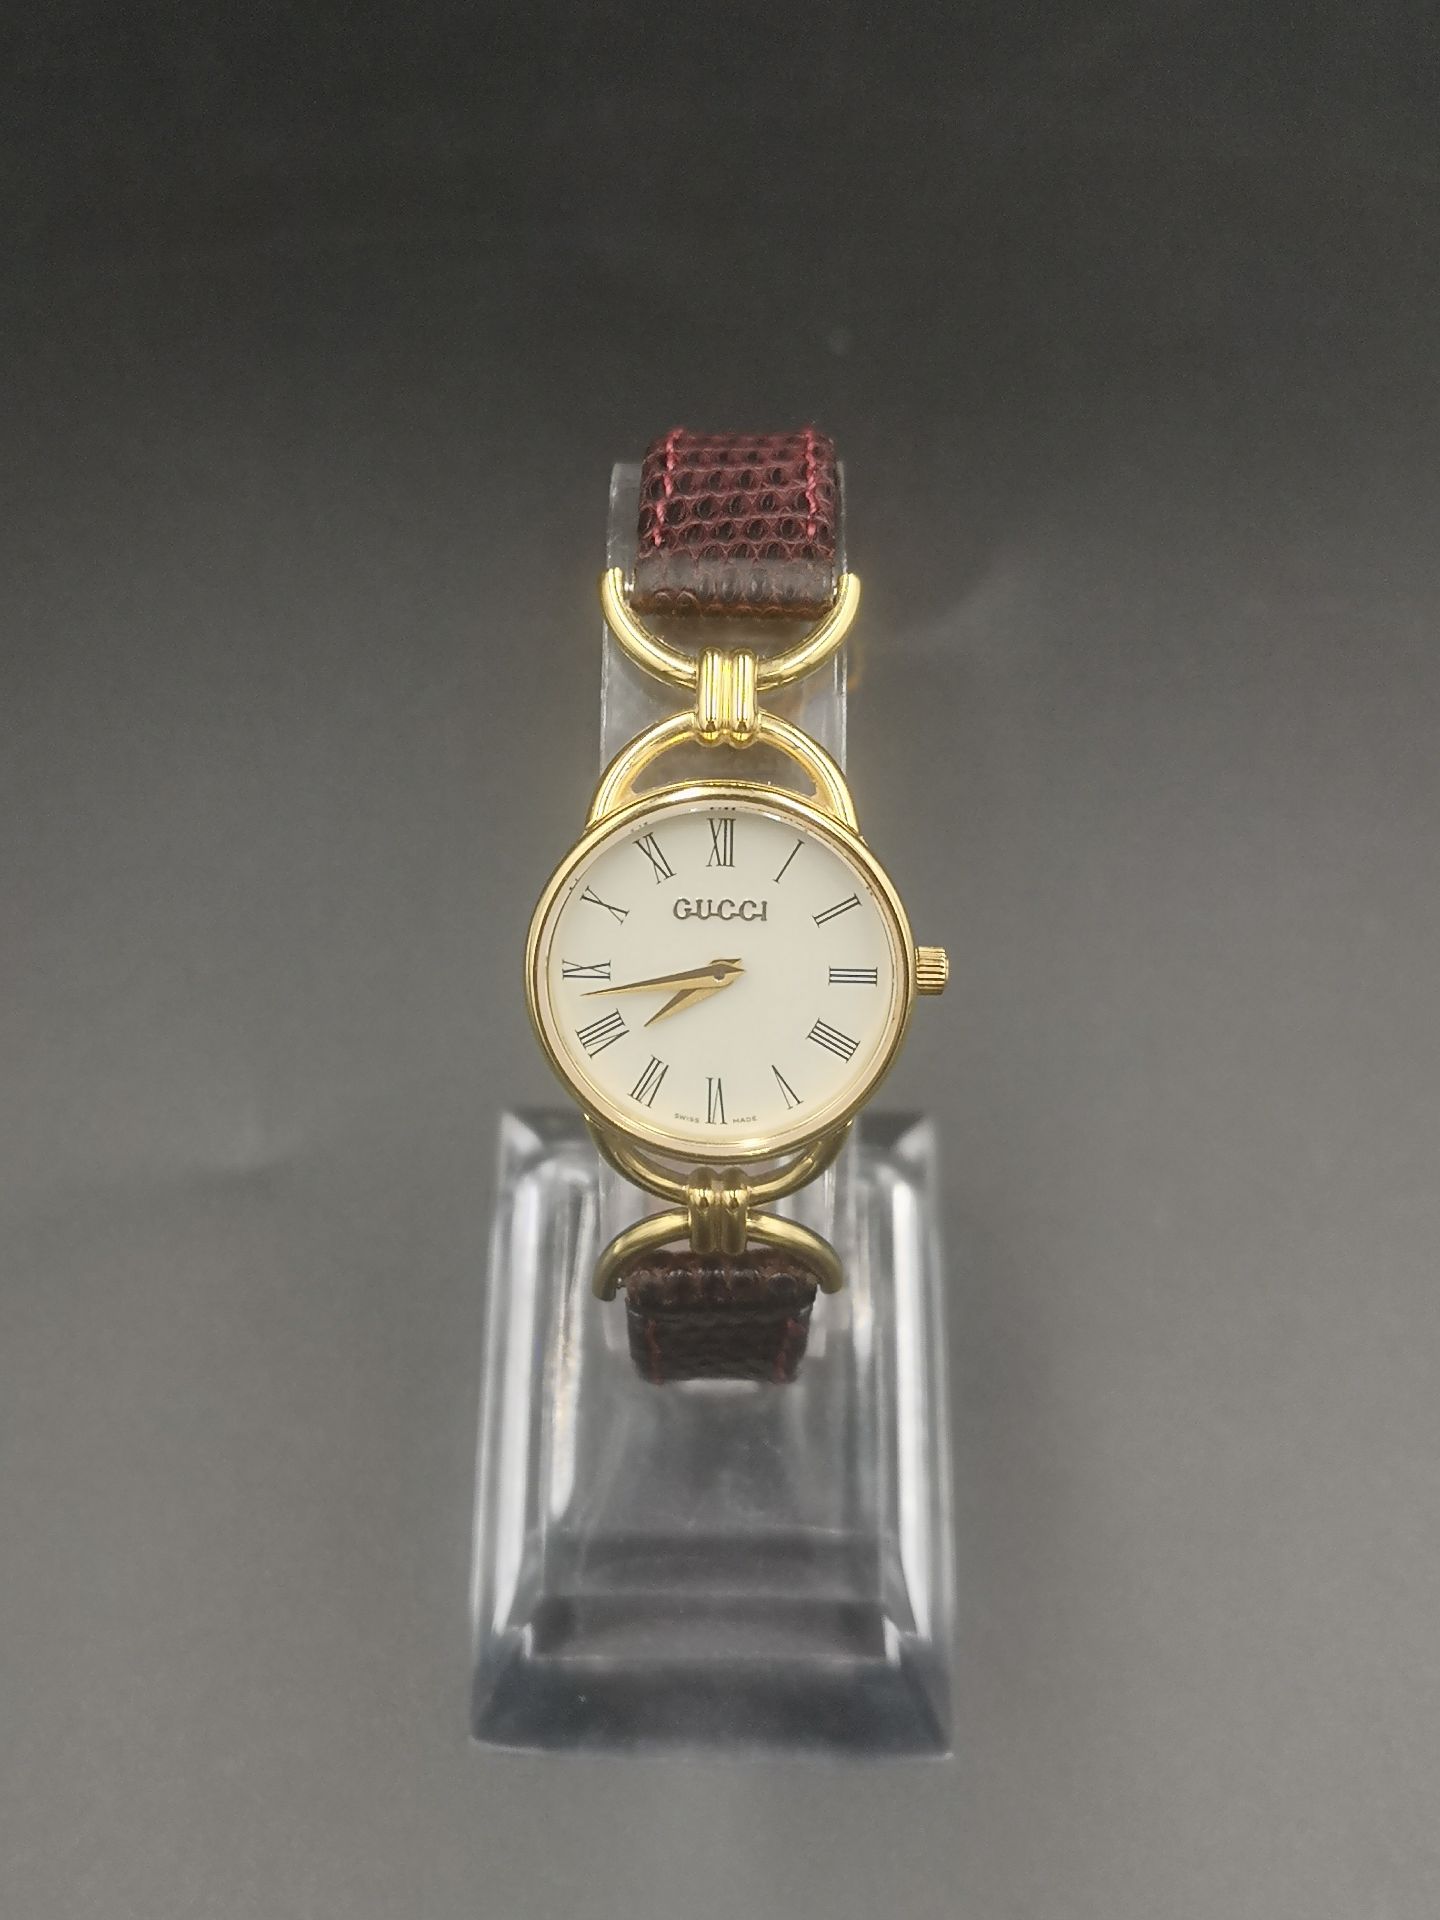 Gucci ladies quartz wrist watch in original box.